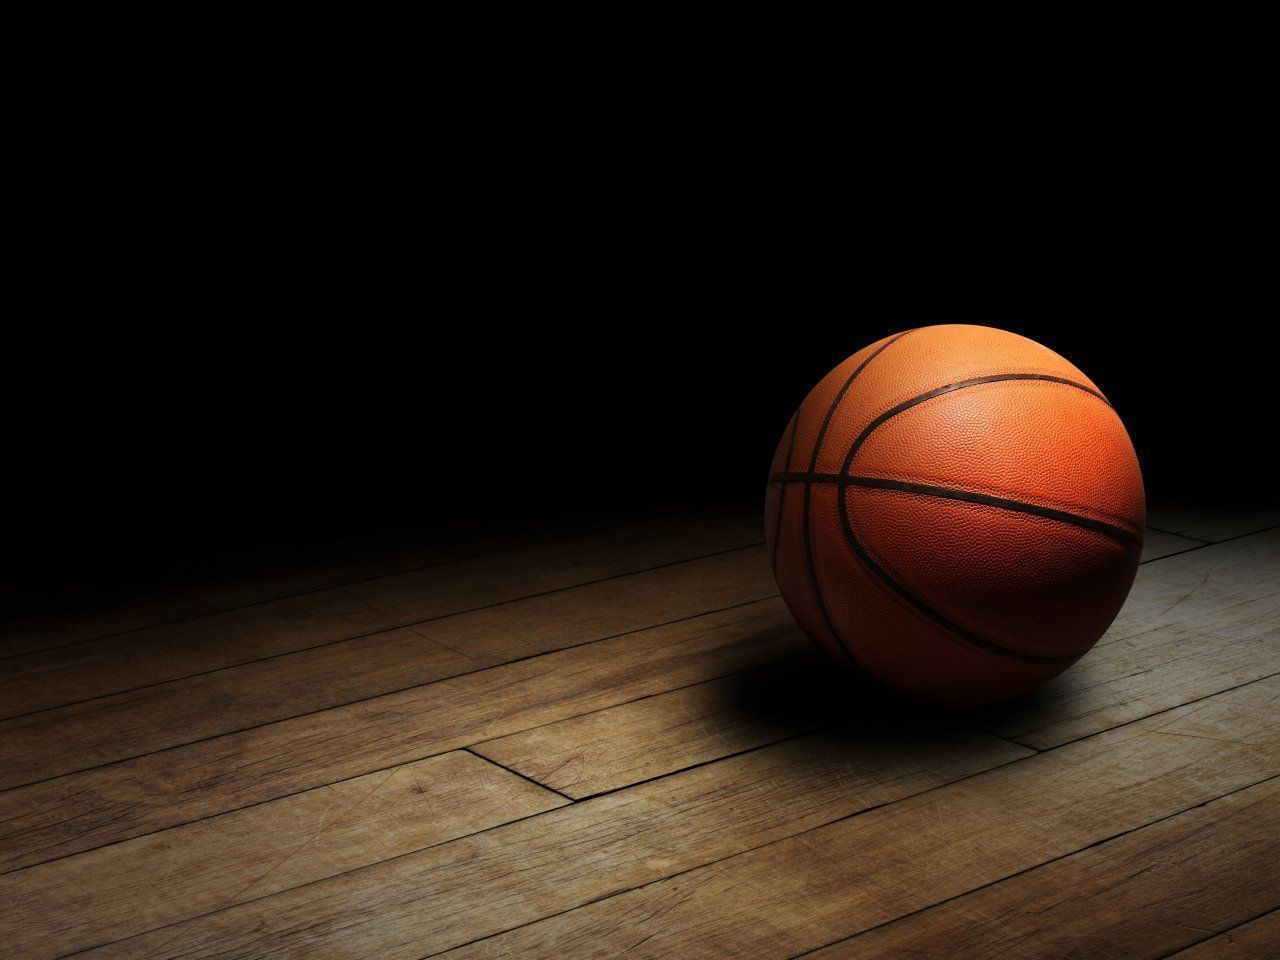 pelota de baloncesto,baloncesto,baloncesto,cancha de baloncesto,madera dura,fotografía de naturaleza muerta